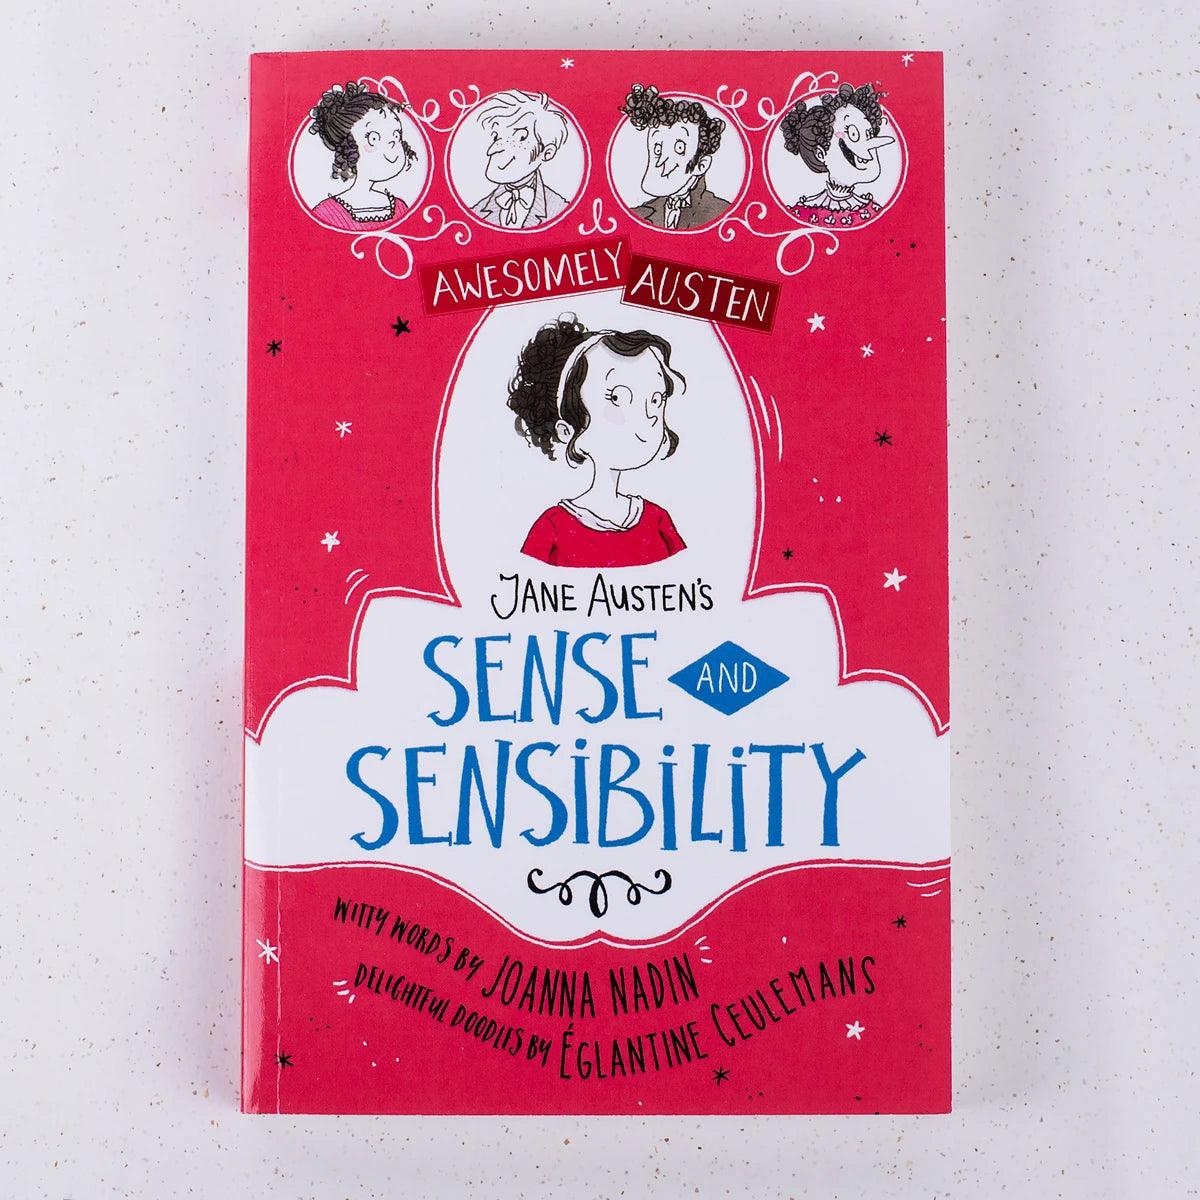 Jane Austen's Sense and Sensibility - Awesomely Austen Retold & Illustrated - JaneAusten.co.uk